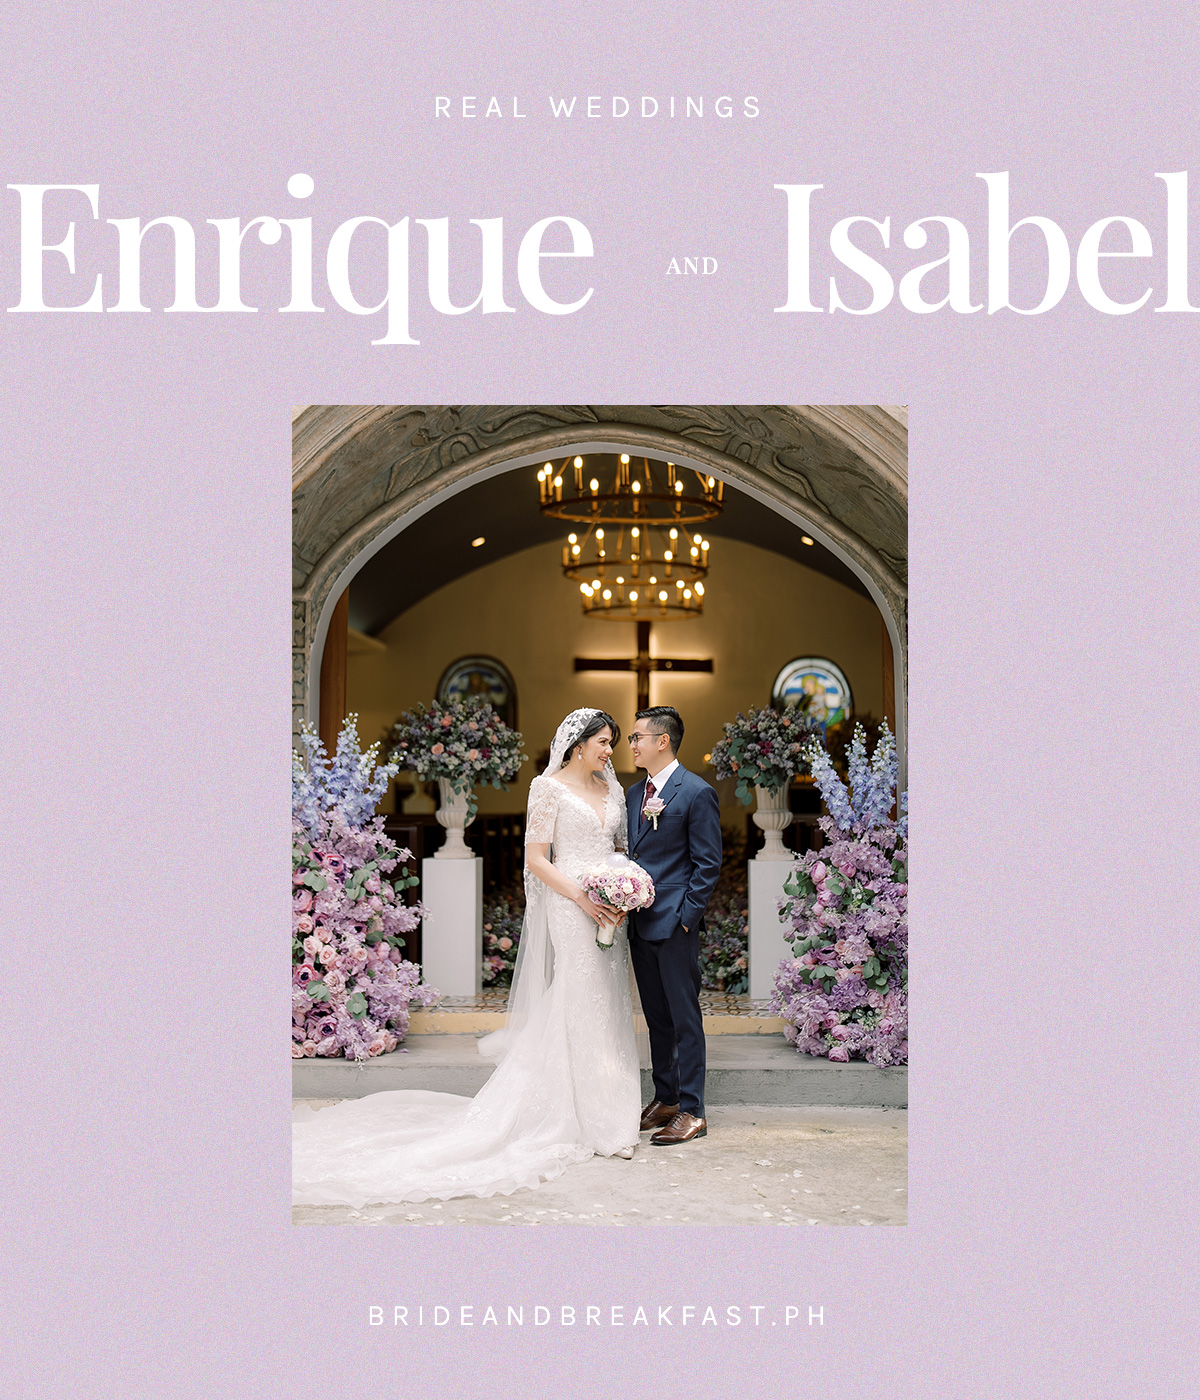 Enrique and Isabel